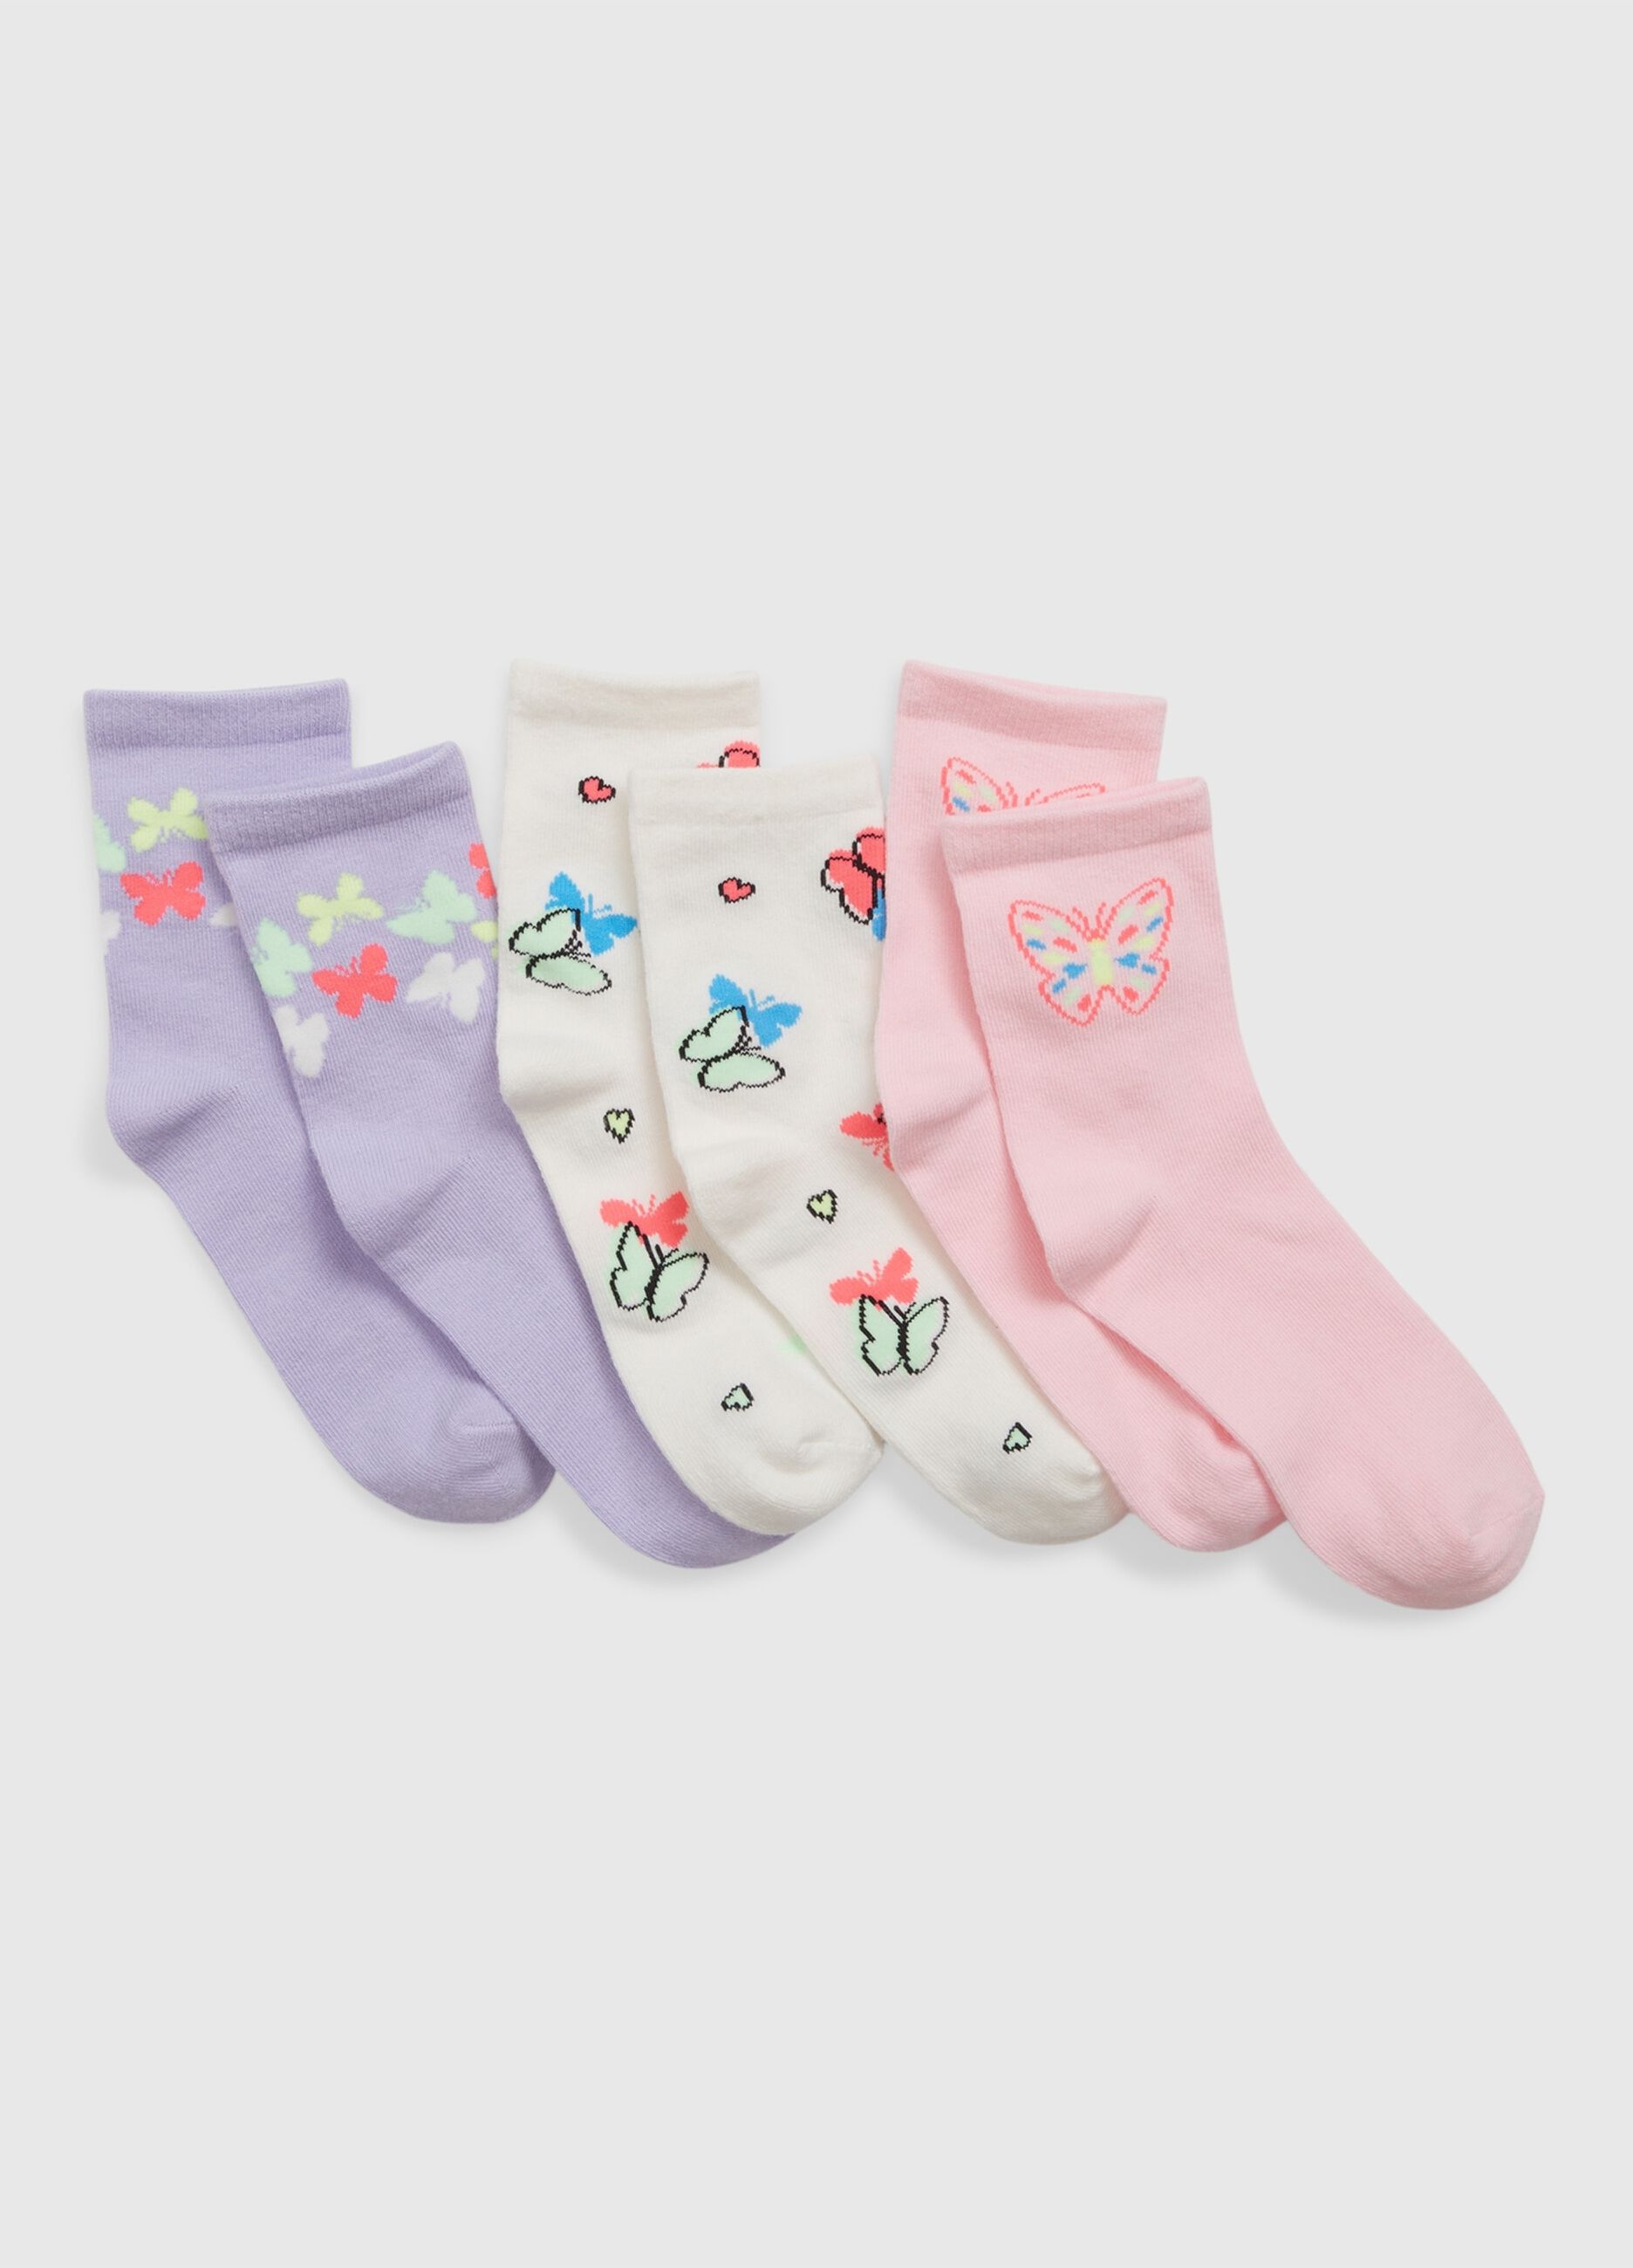 Three-pair pack socks with butterflies design